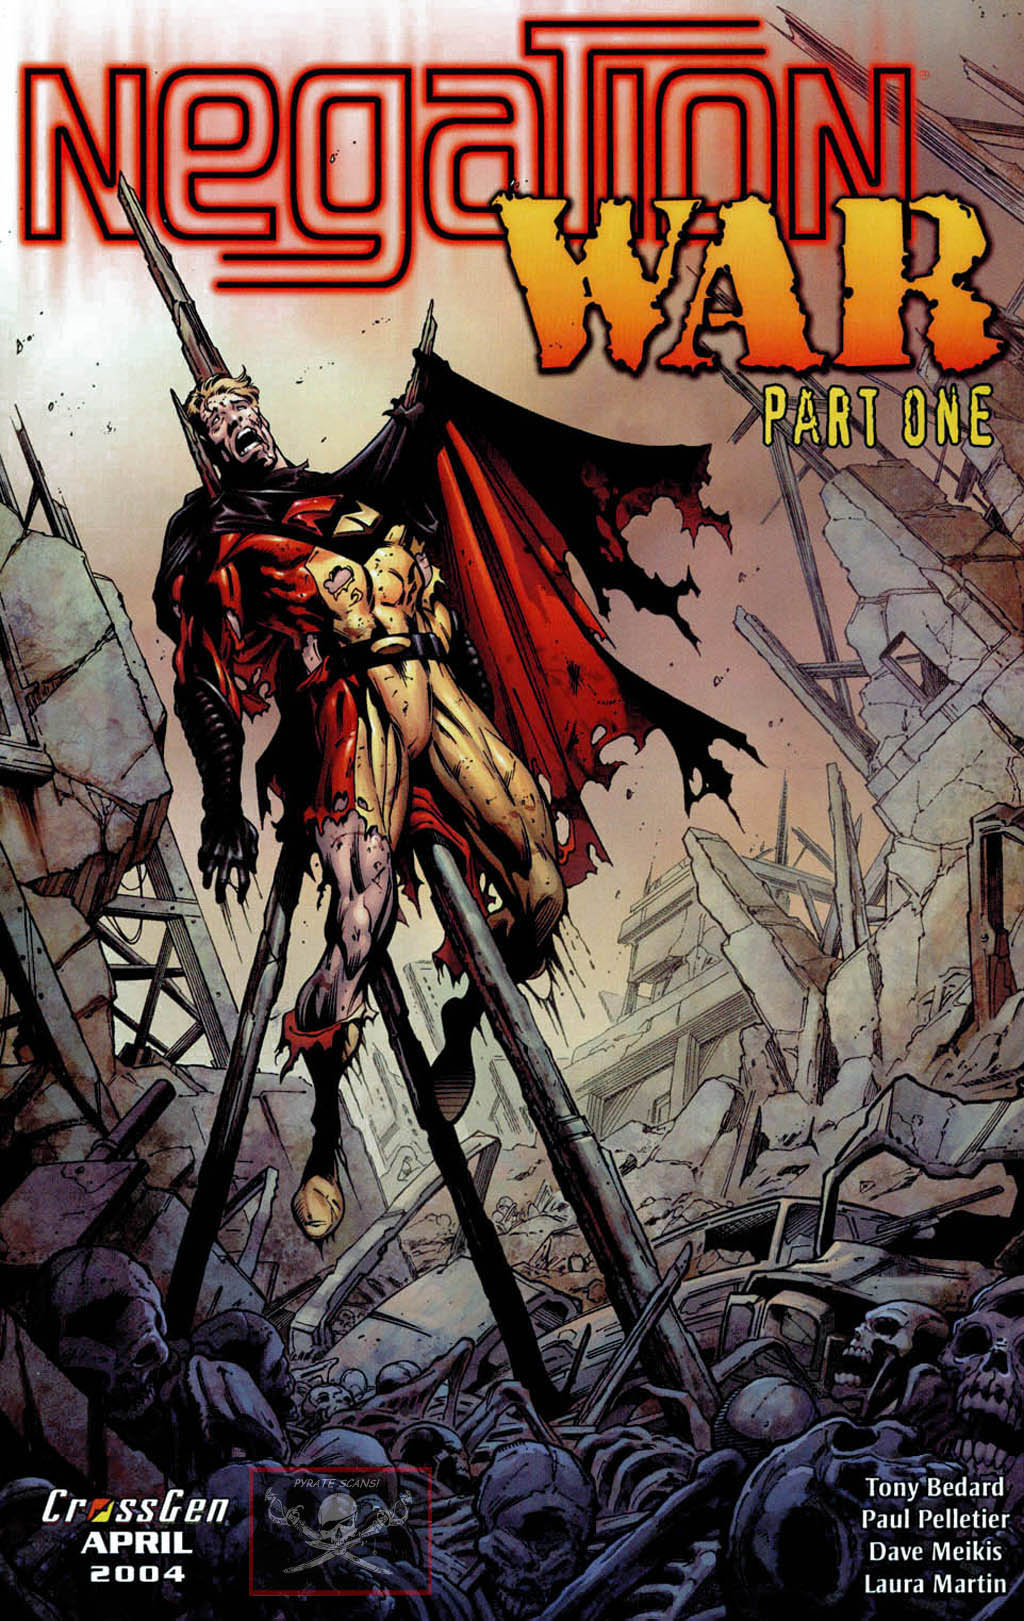 Read online Negation War comic -  Issue #1 - 1